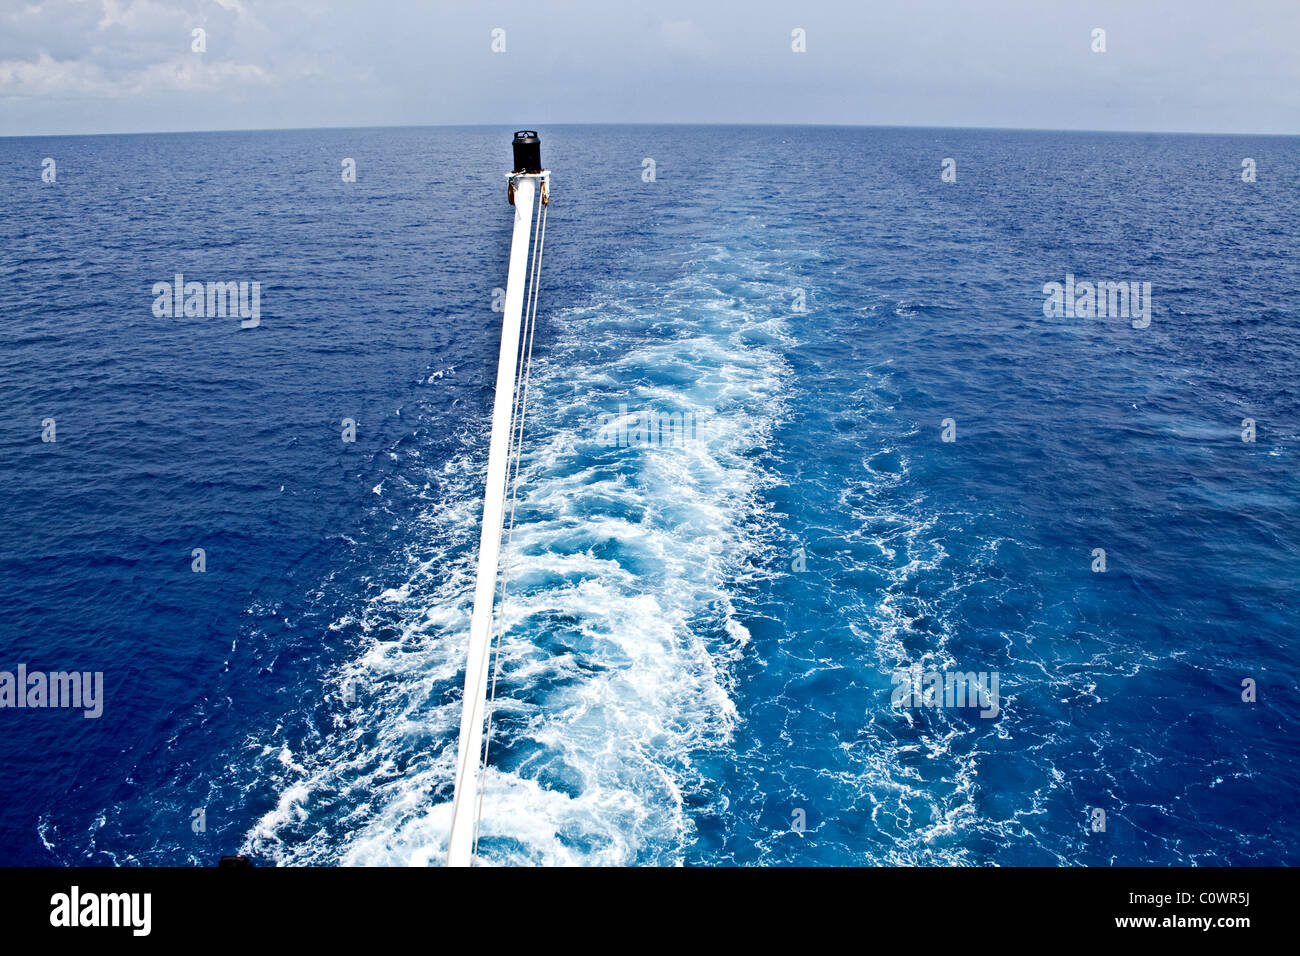 Wake behind a cruise ship on a calm ocean Stock Photo